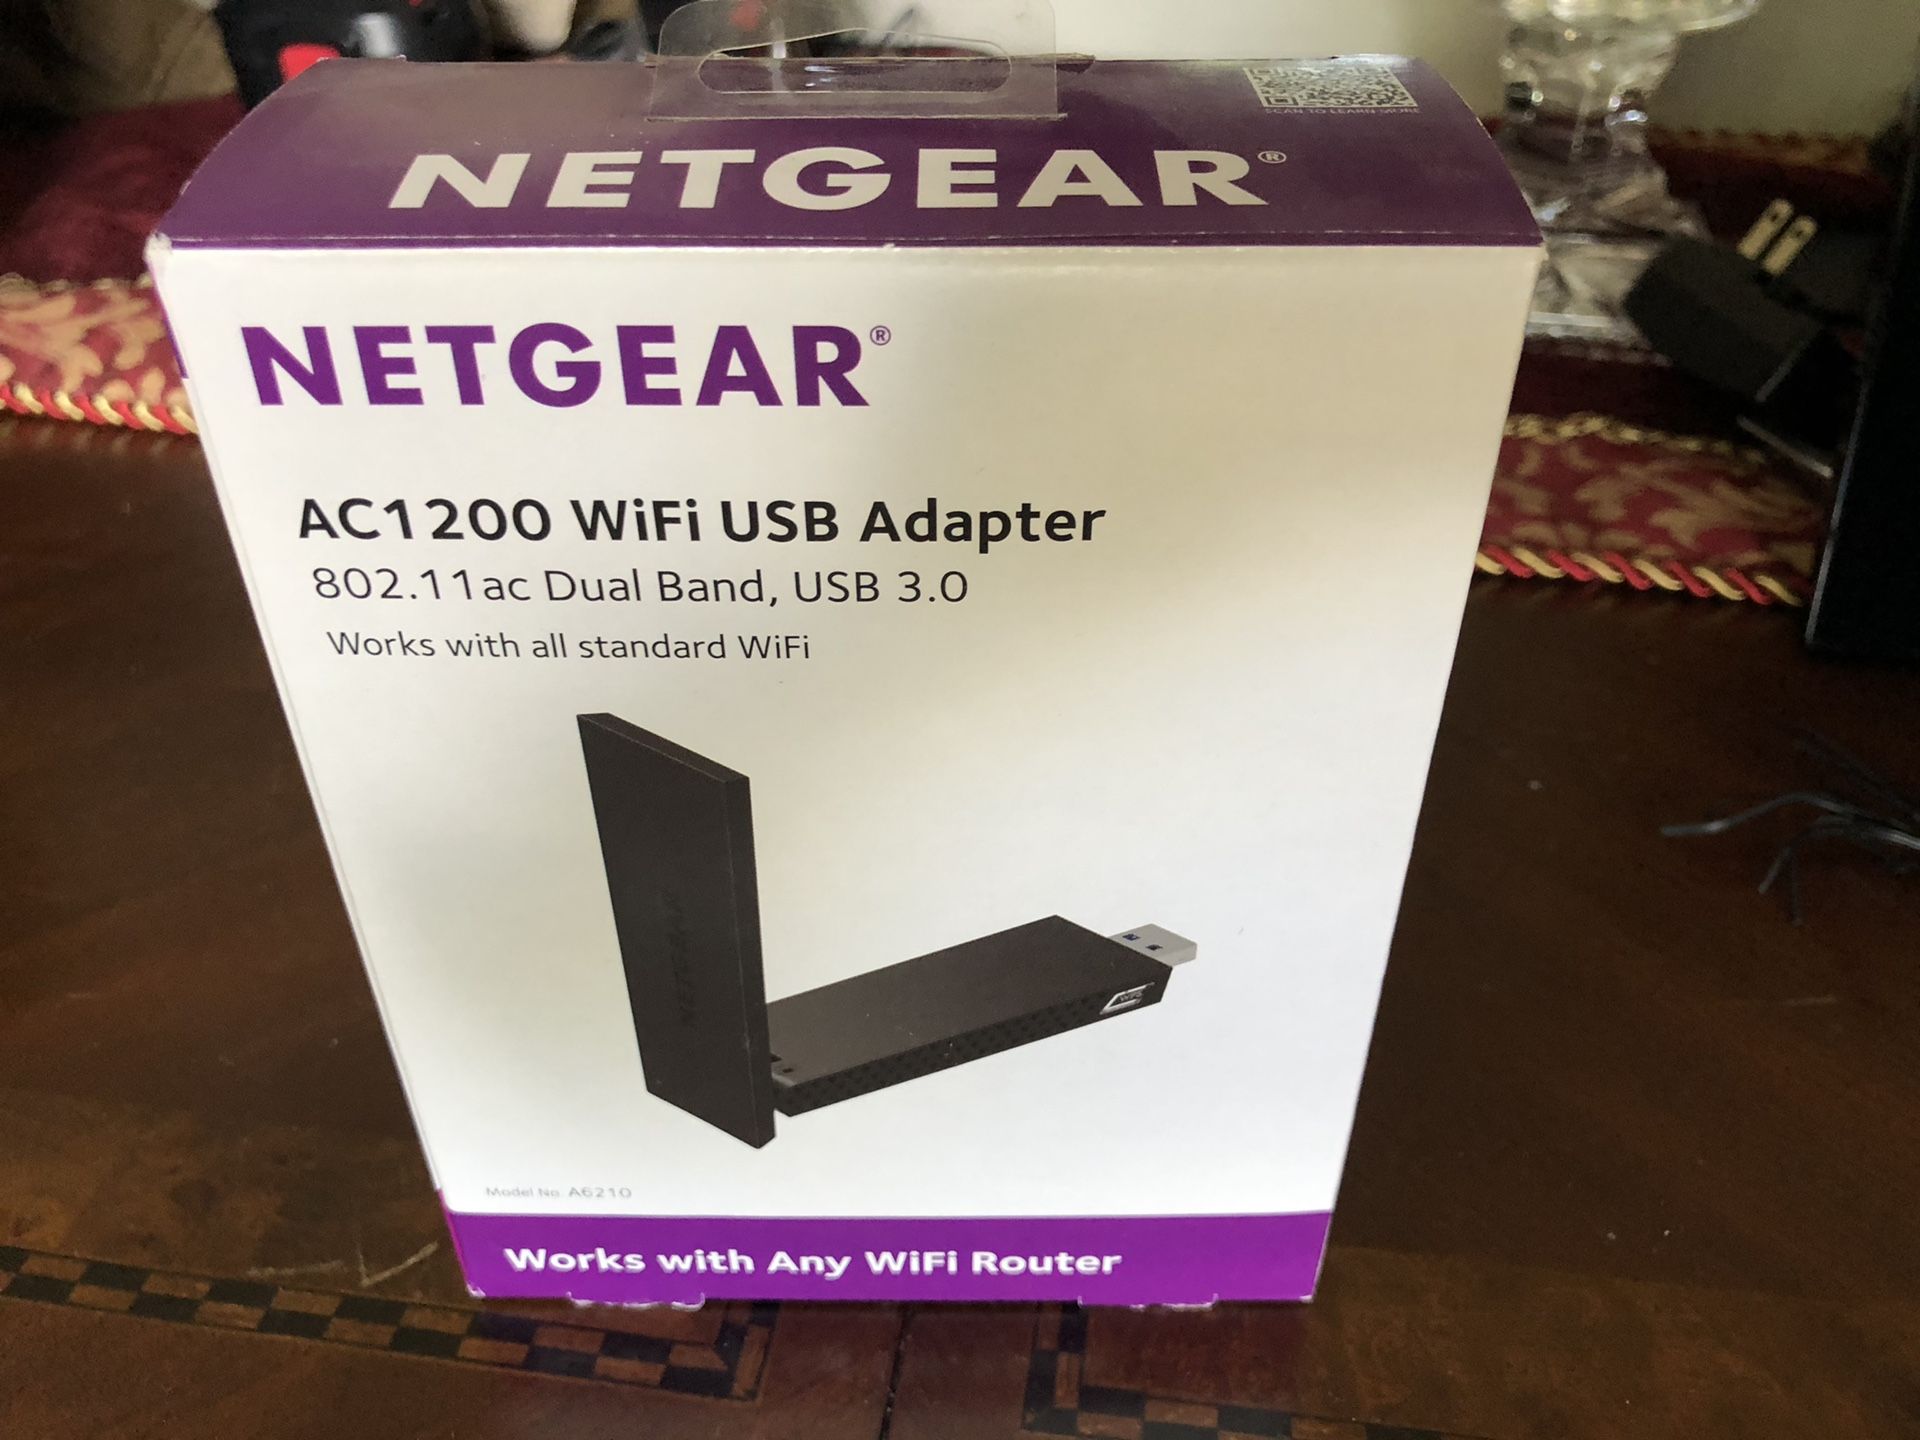 Netgear AC1200 WiFi USB Adaptor